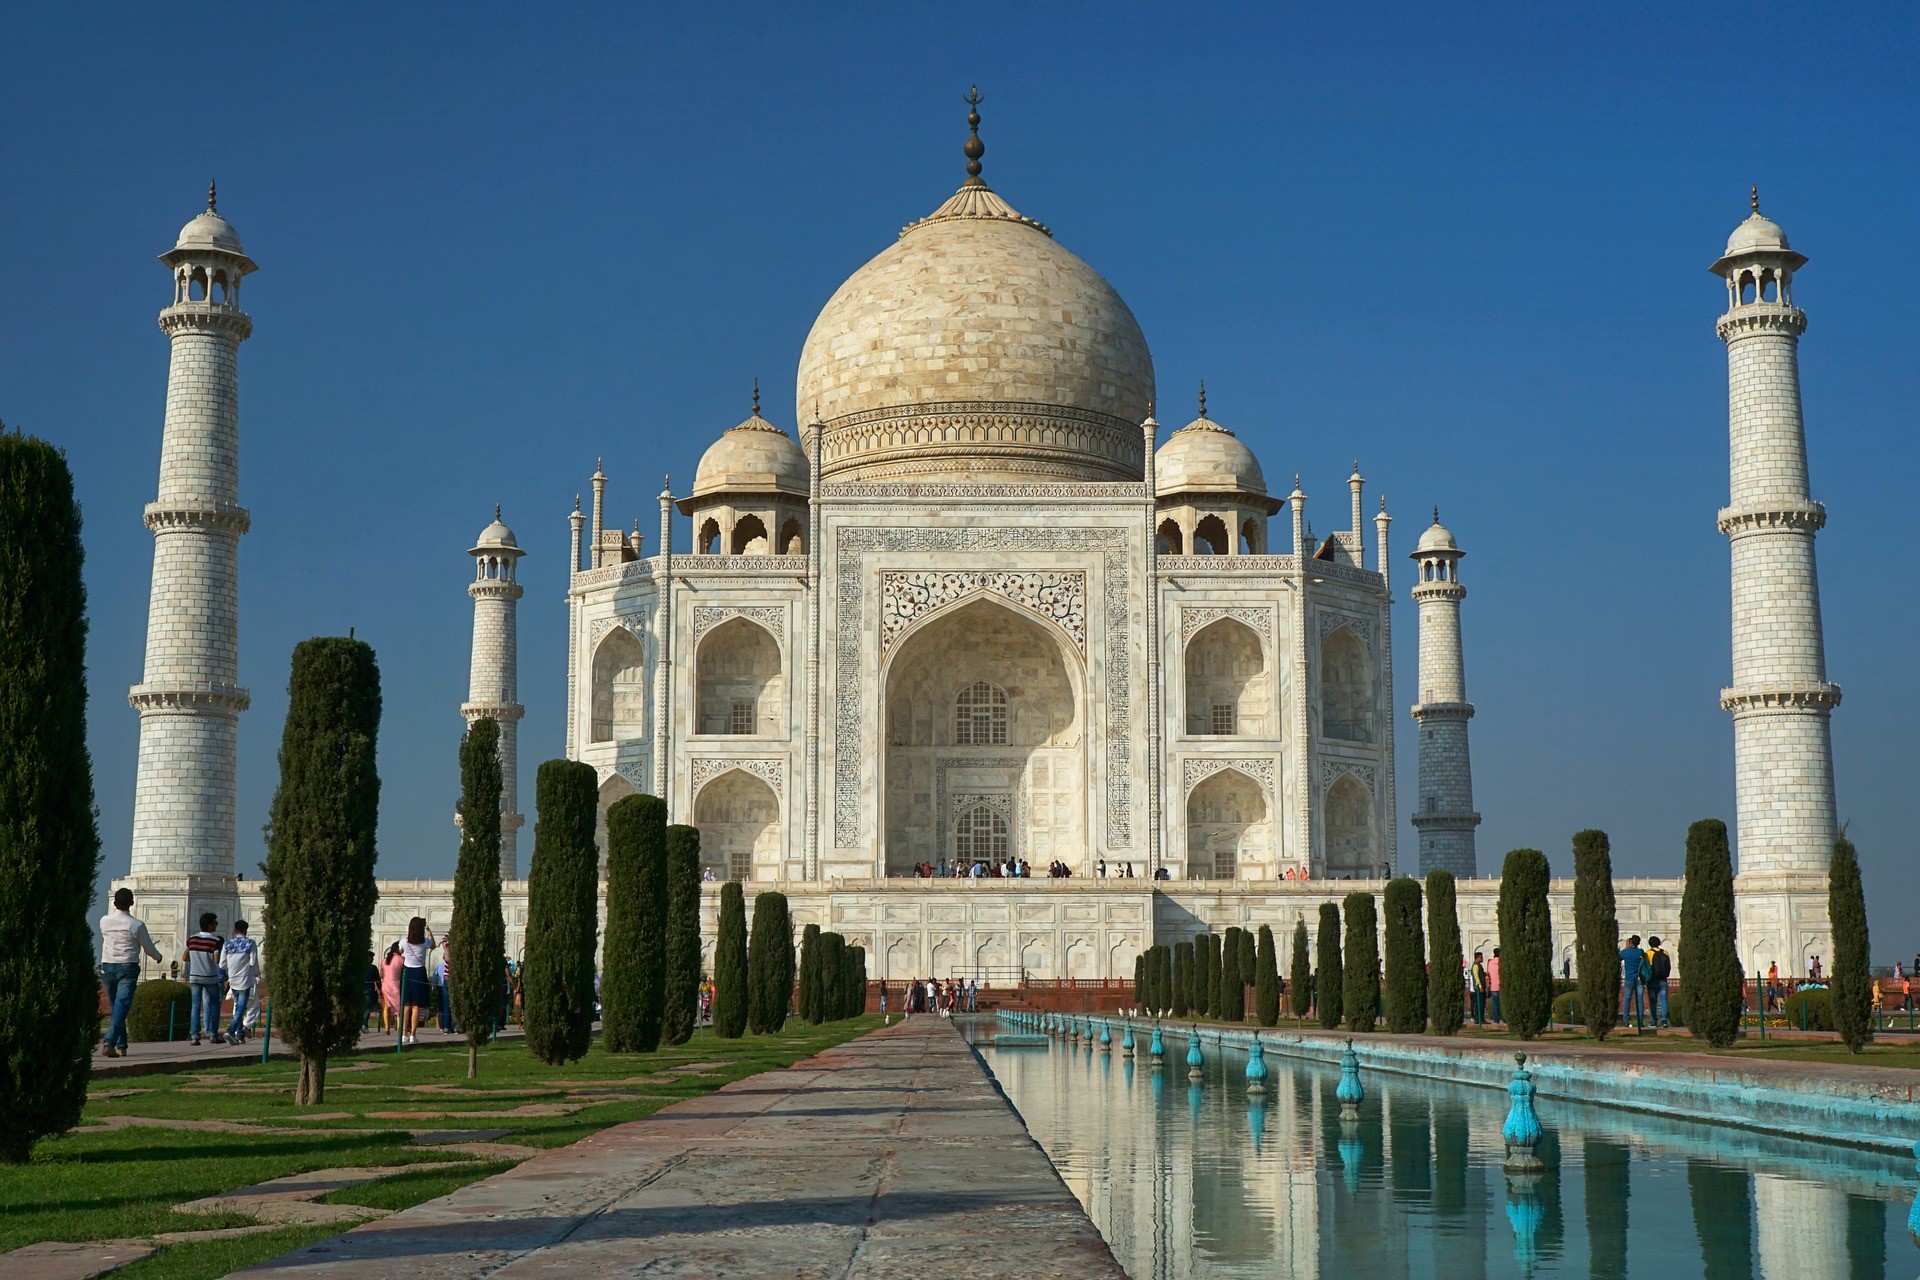 Le Taj Mahal